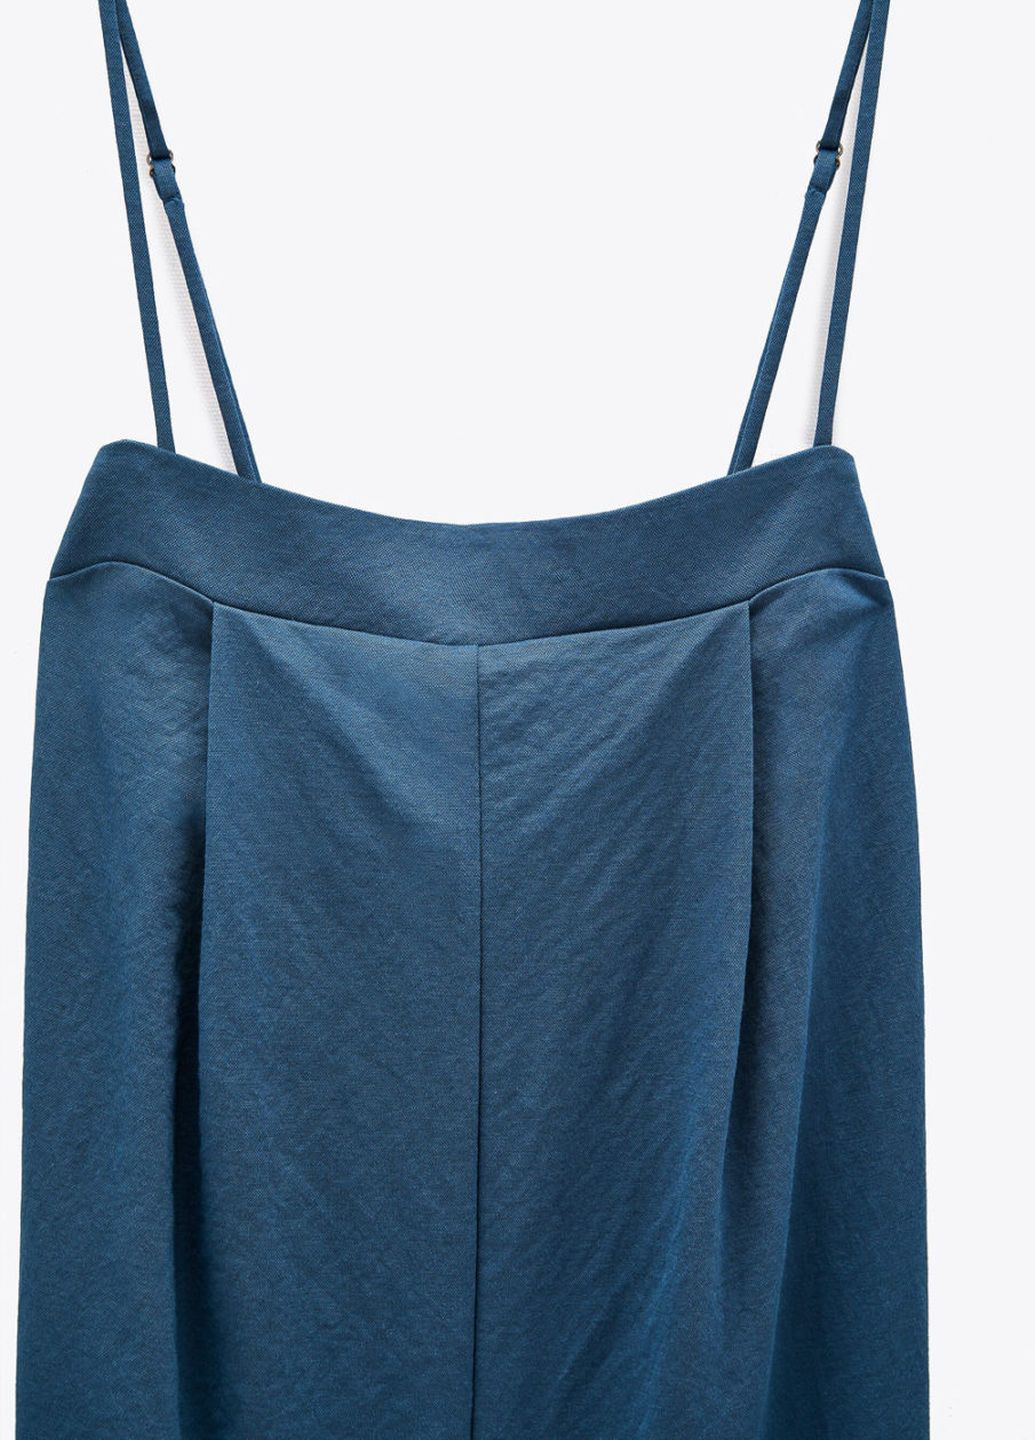 Комбинезон Zara комбинезон-шорты однотонный тёмно-синий кэжуал вискоза